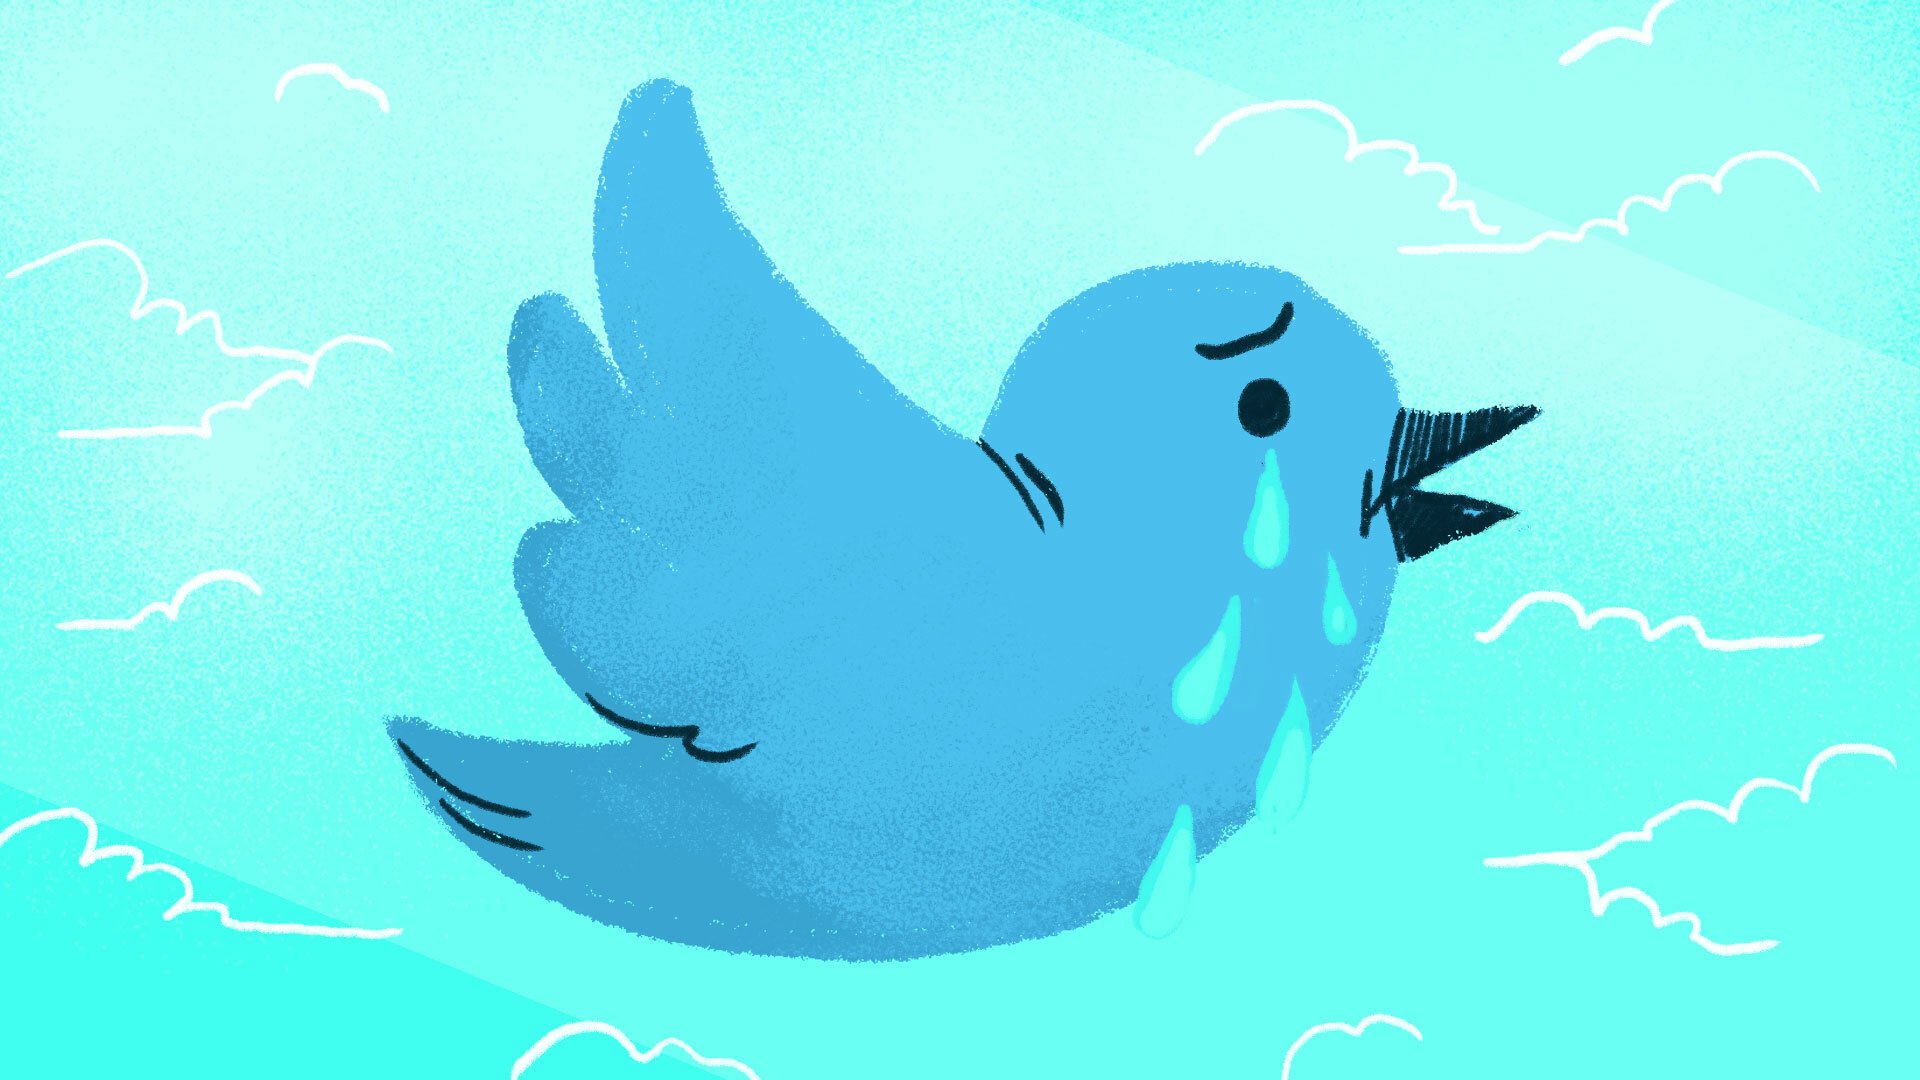 Twitter bird crying